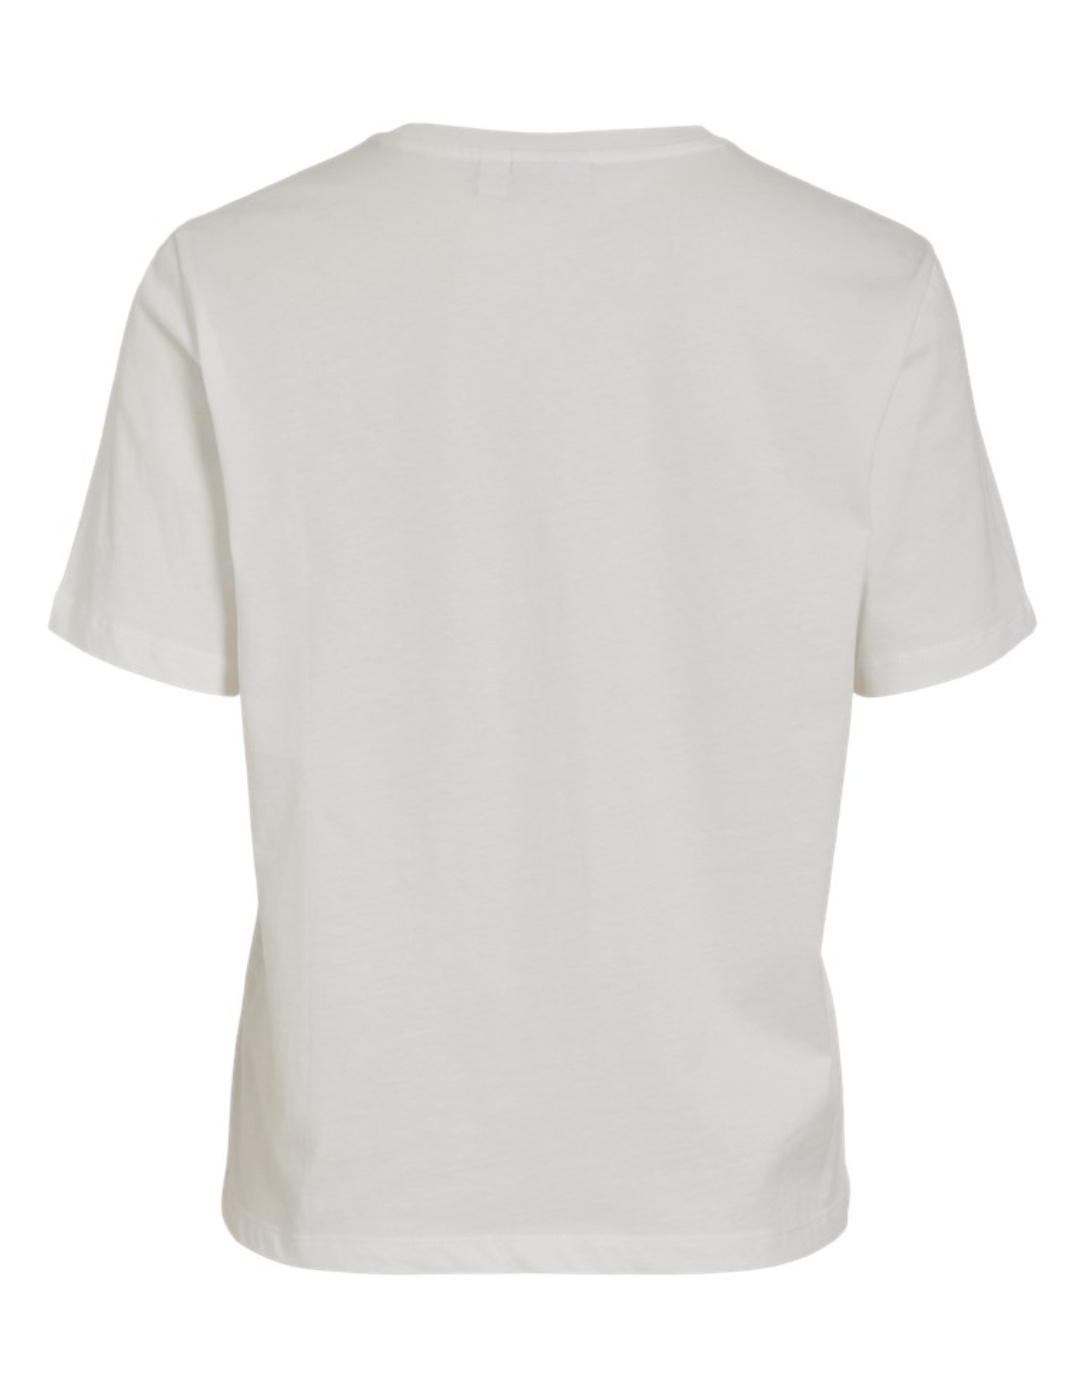 Camiseta Vila Bil blanca letras negras manga corta de mujer